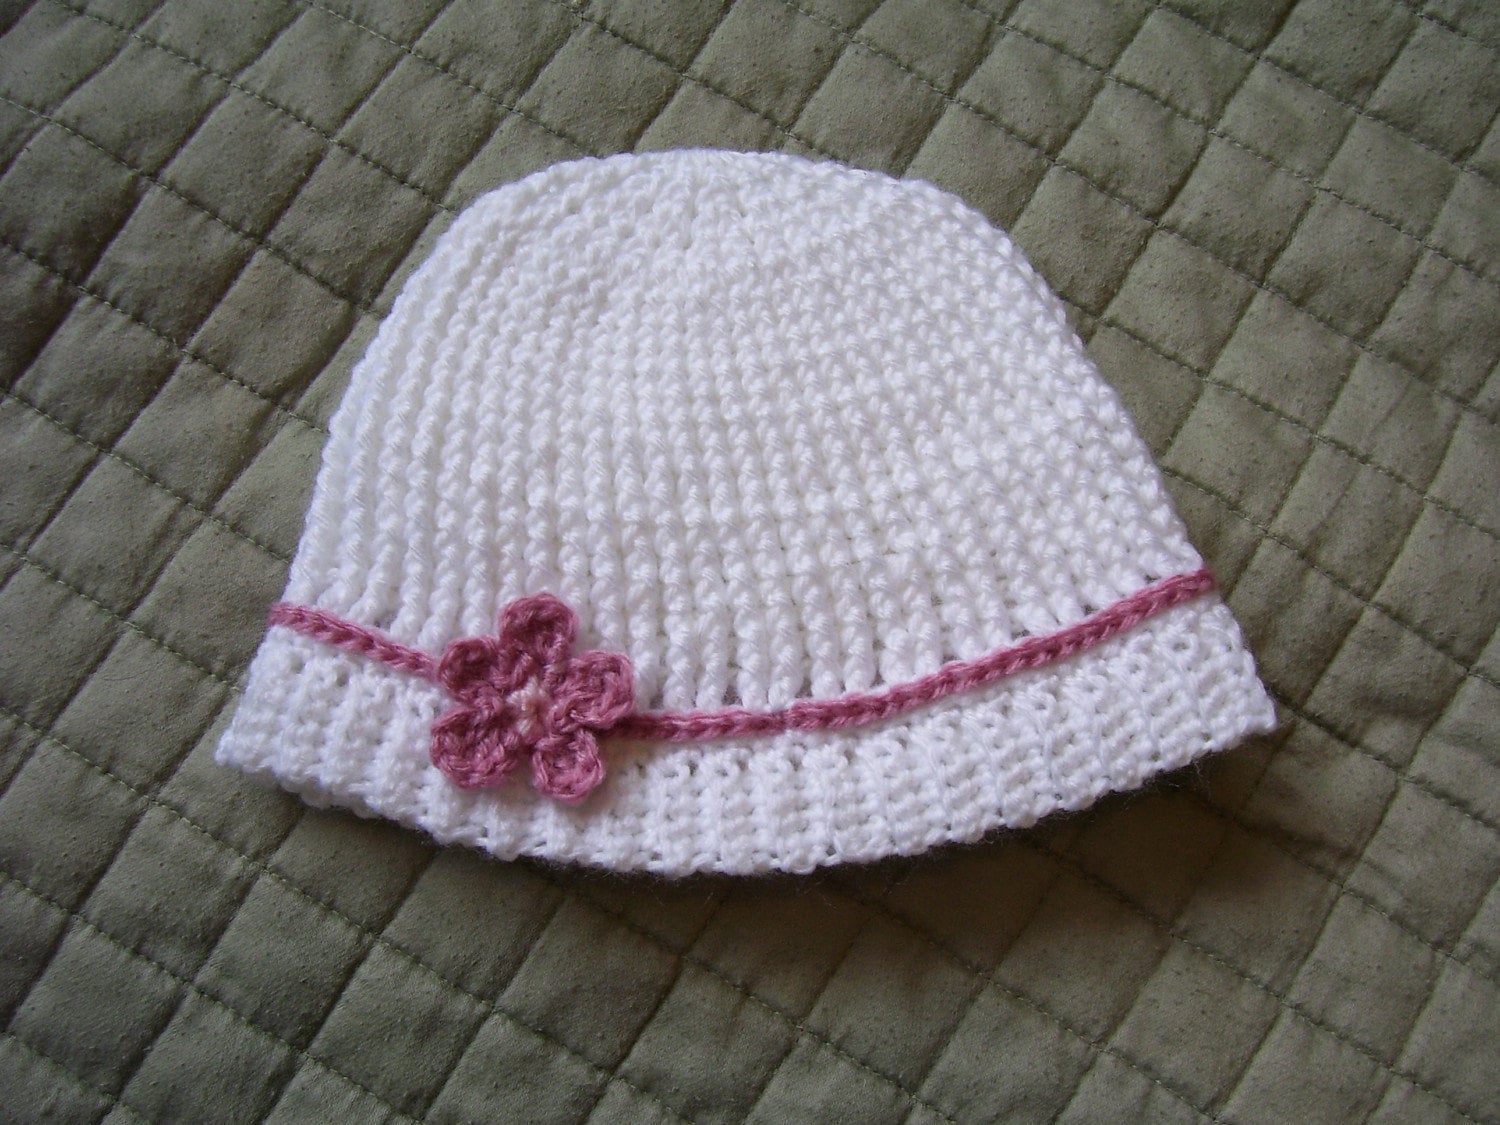 My Longest Year: Crochet Toddler Beanie Hat w/Flower